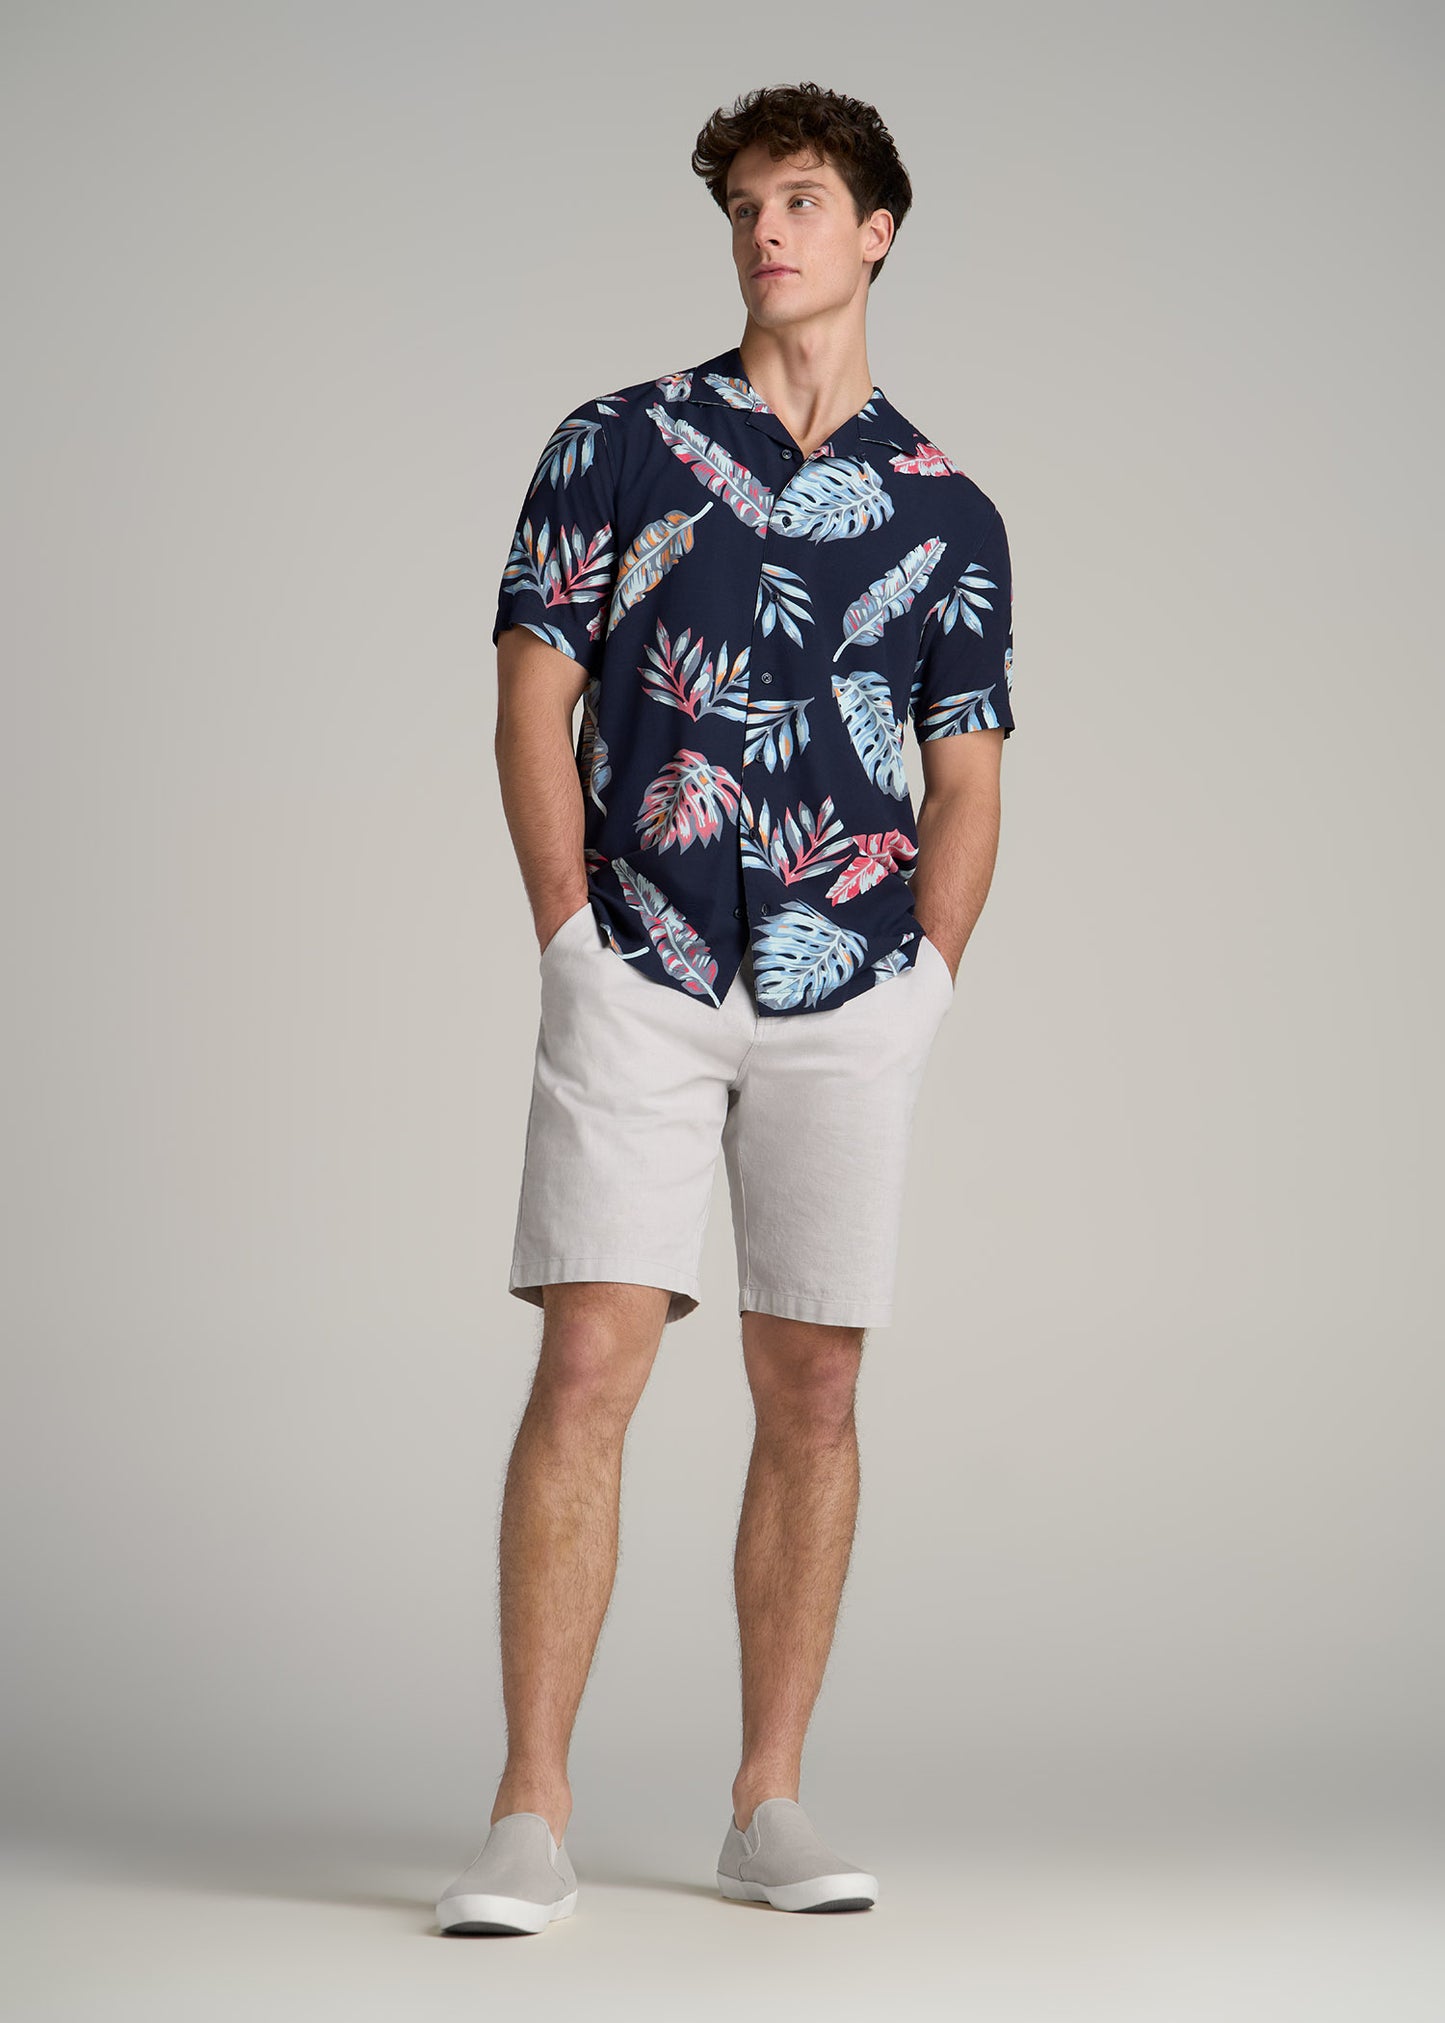 Short Sleeve Resort Shirt for Tall Men in Indigo Floral Print